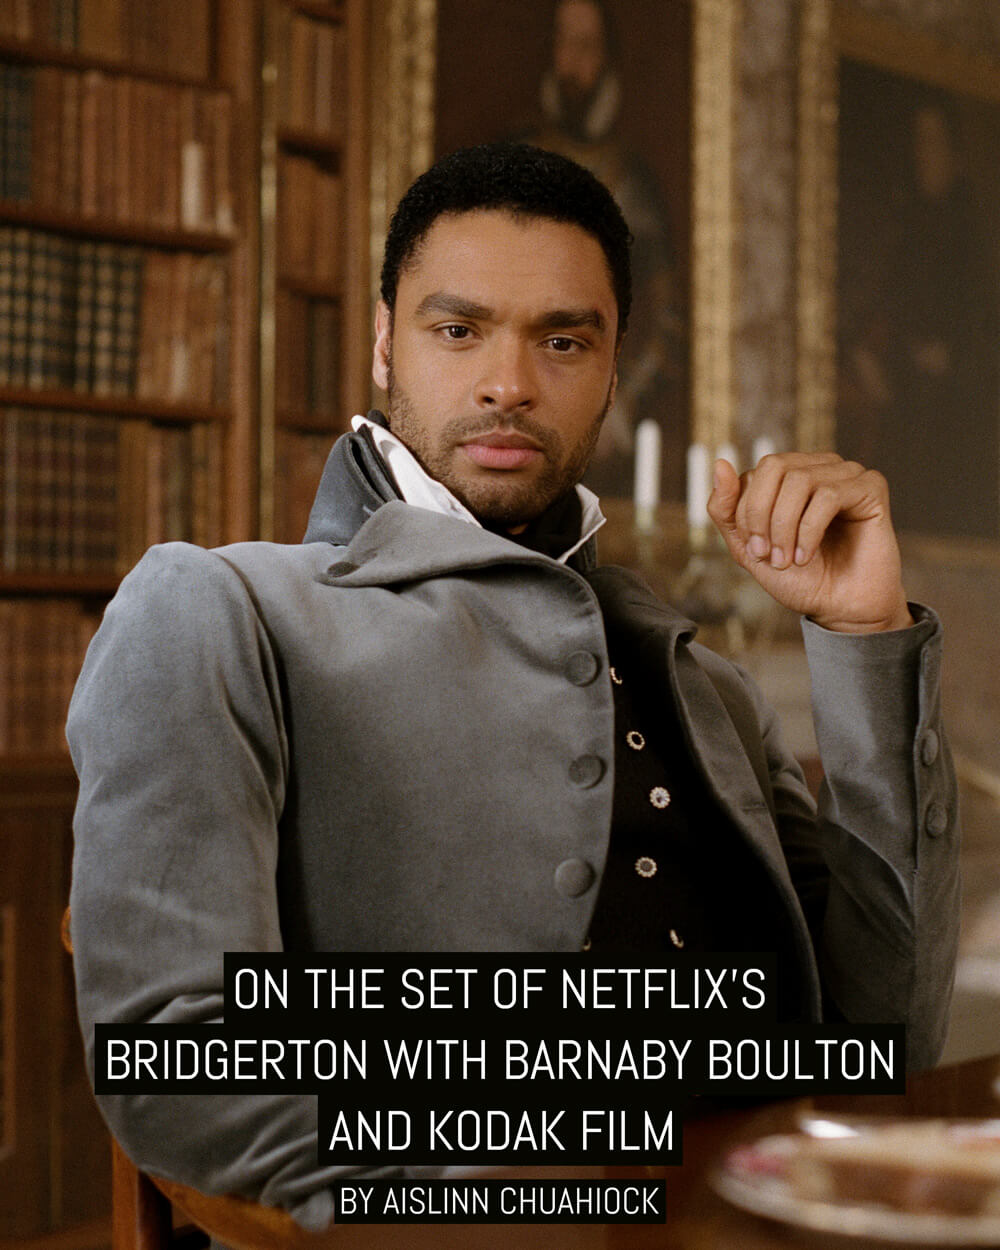 On the set of Netflix’s Bridgerton with Barnaby Boulton and Kodak film